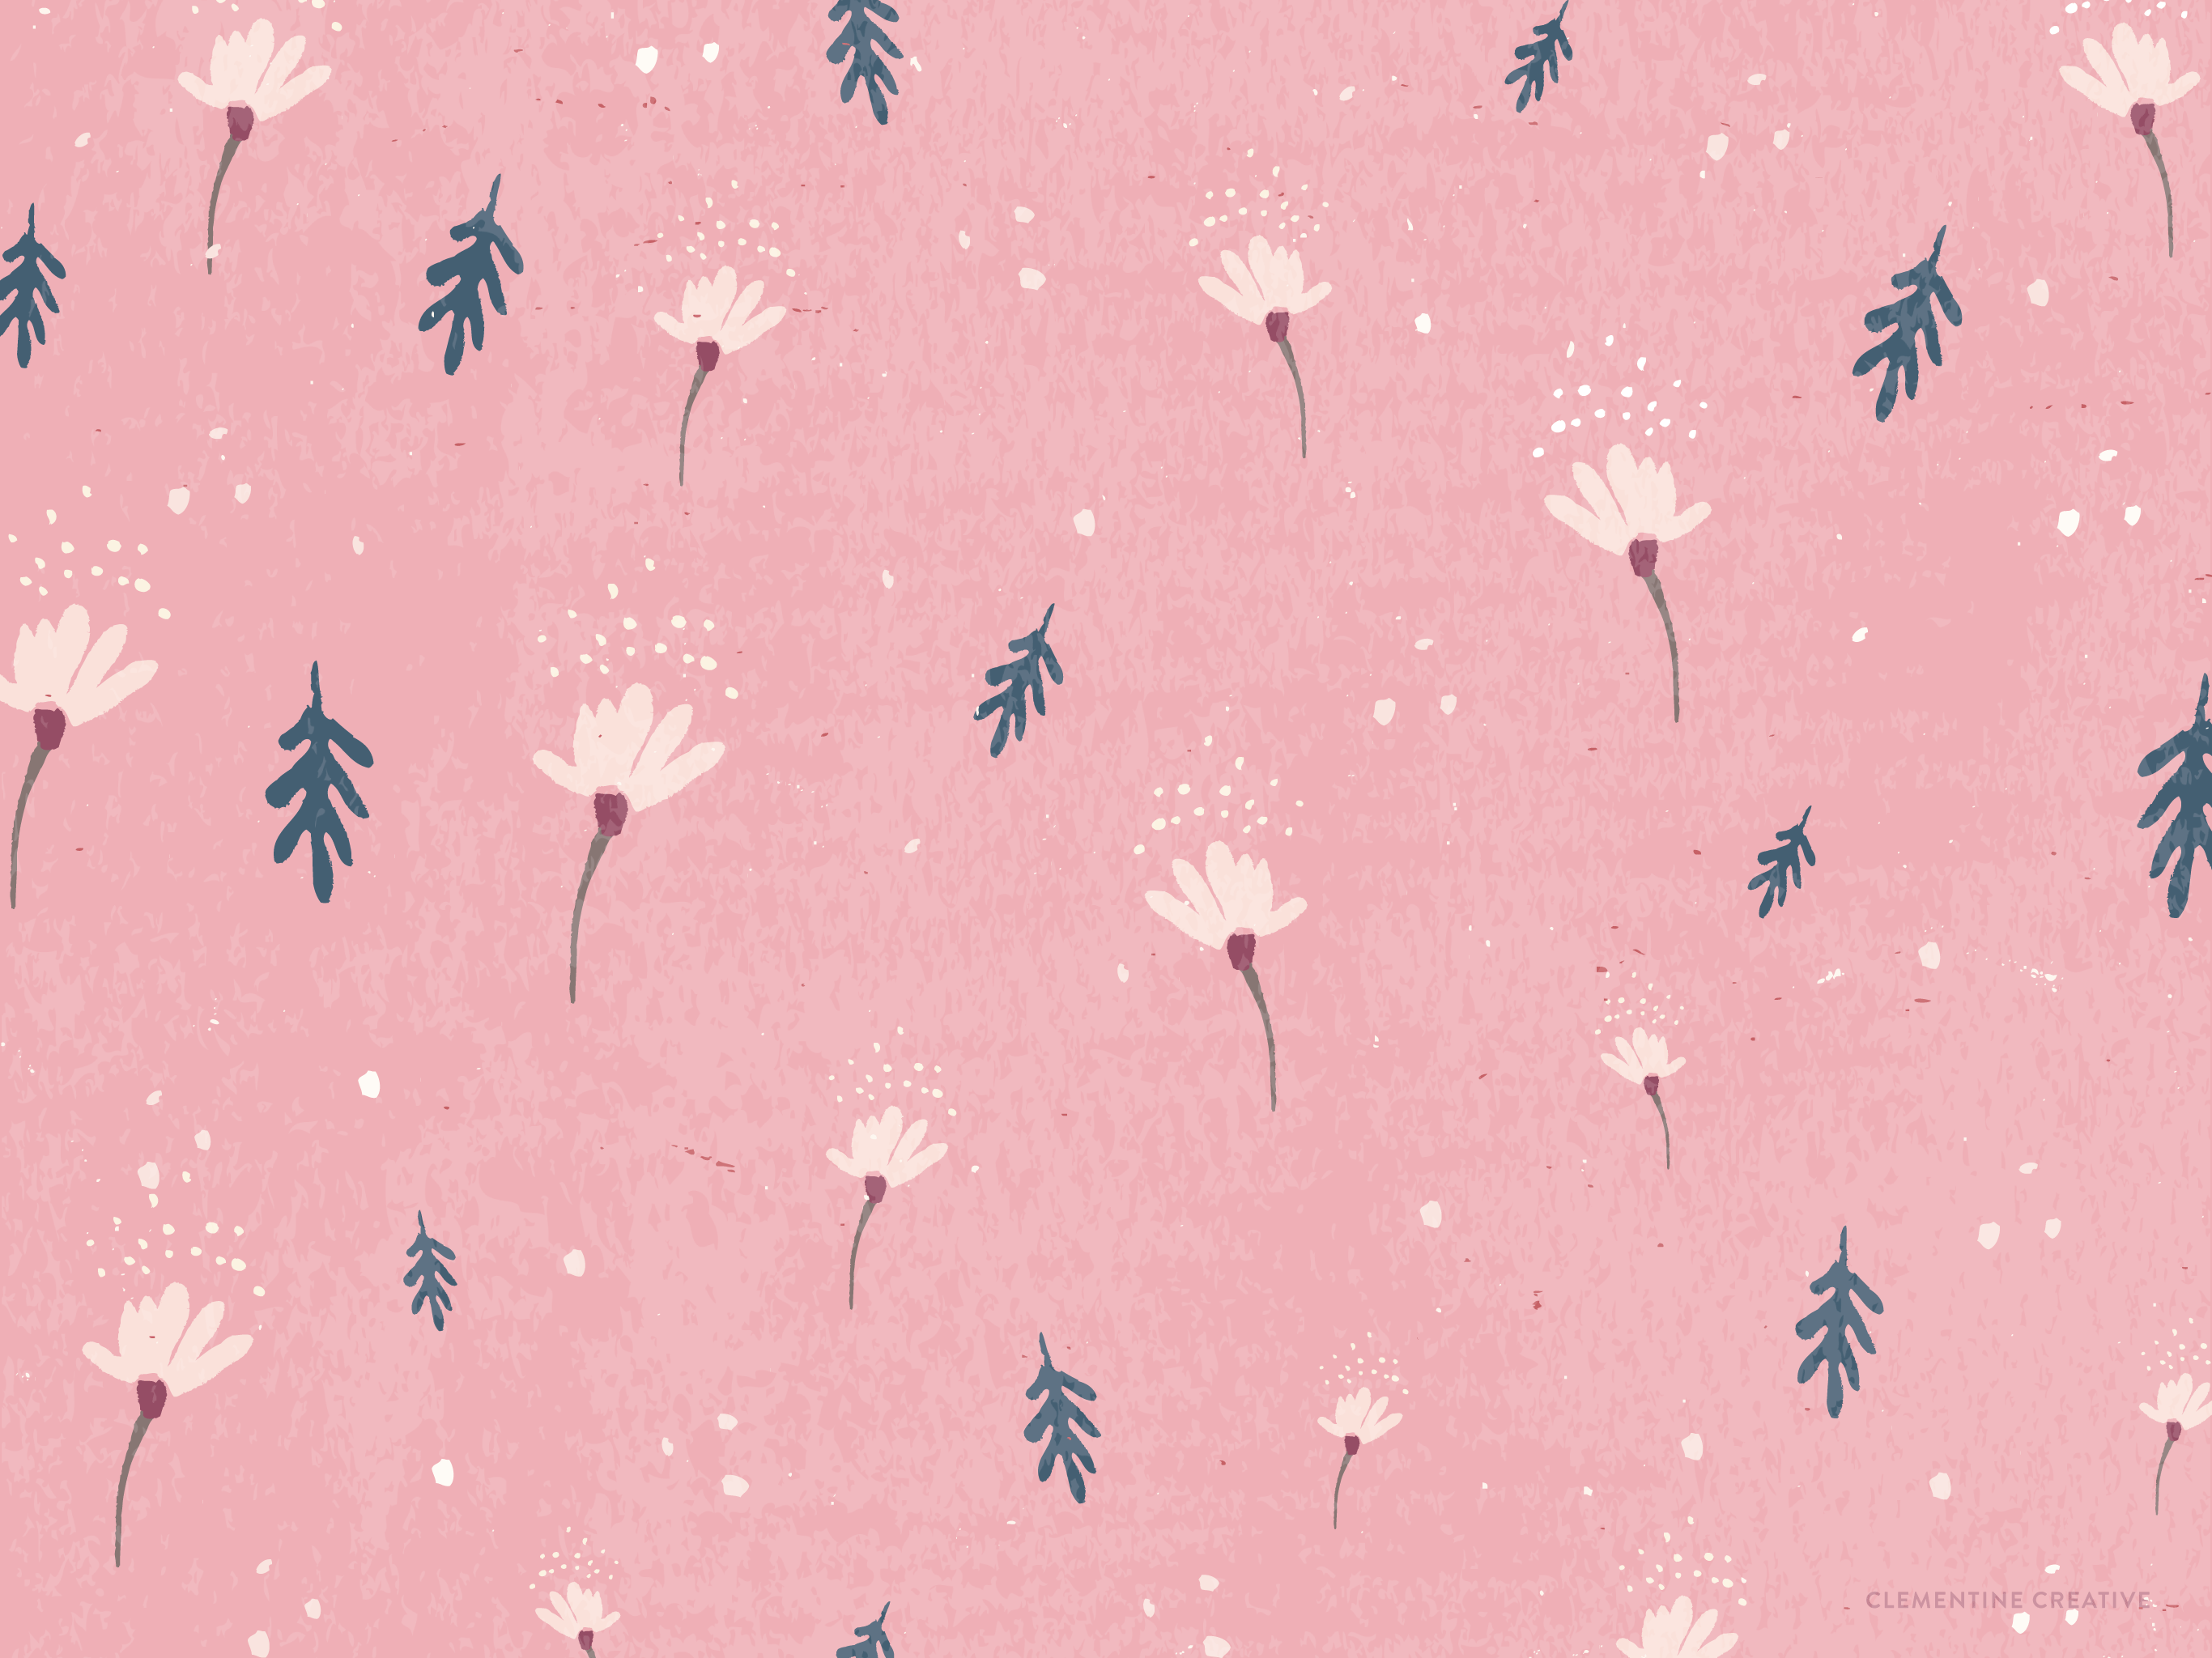 Dainty Falling Flowers Ipad Pink.png (2732×2048). Aesthetic Desktop Wallpaper, Macbook Wallpaper, IPad Wallpaper